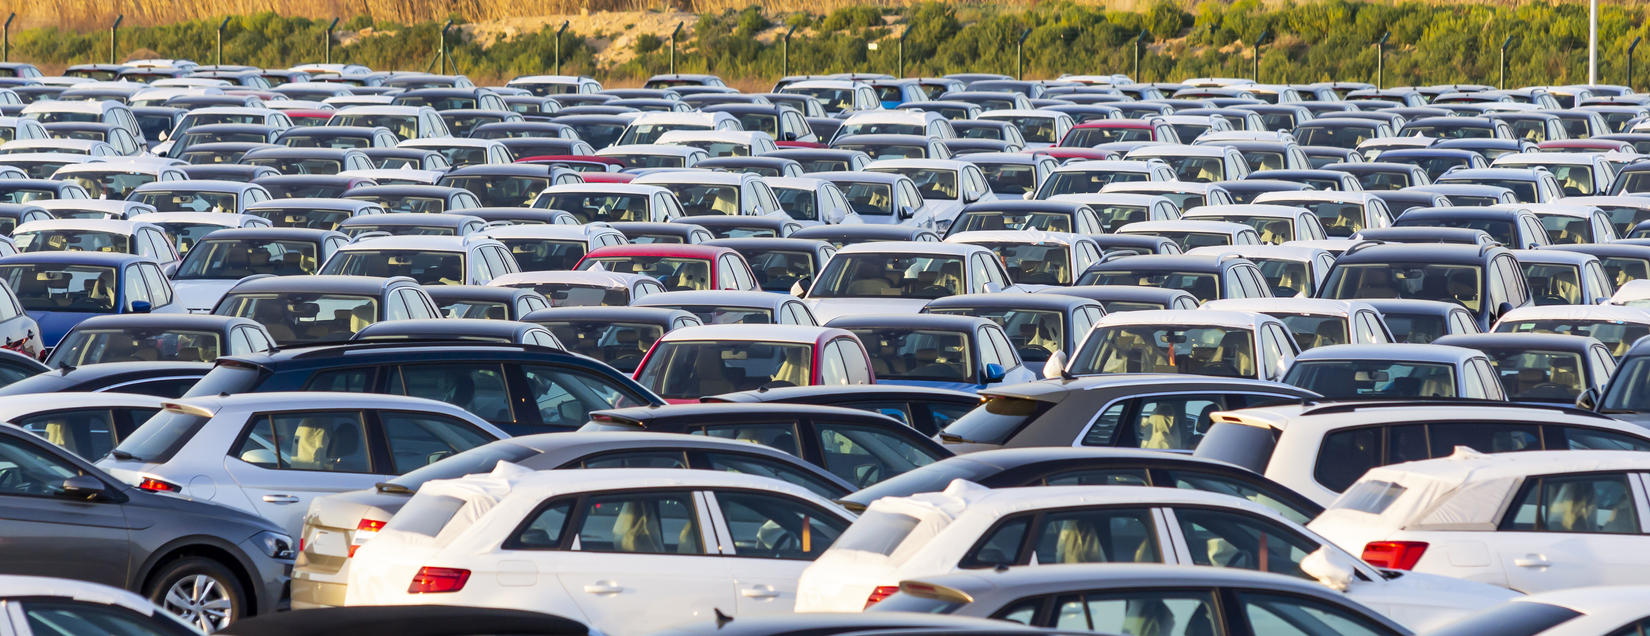 Auto Sales in October 2020: October 2020 Sales Analysis: Festival demand revs up auto sales, Auto News, ET Auto